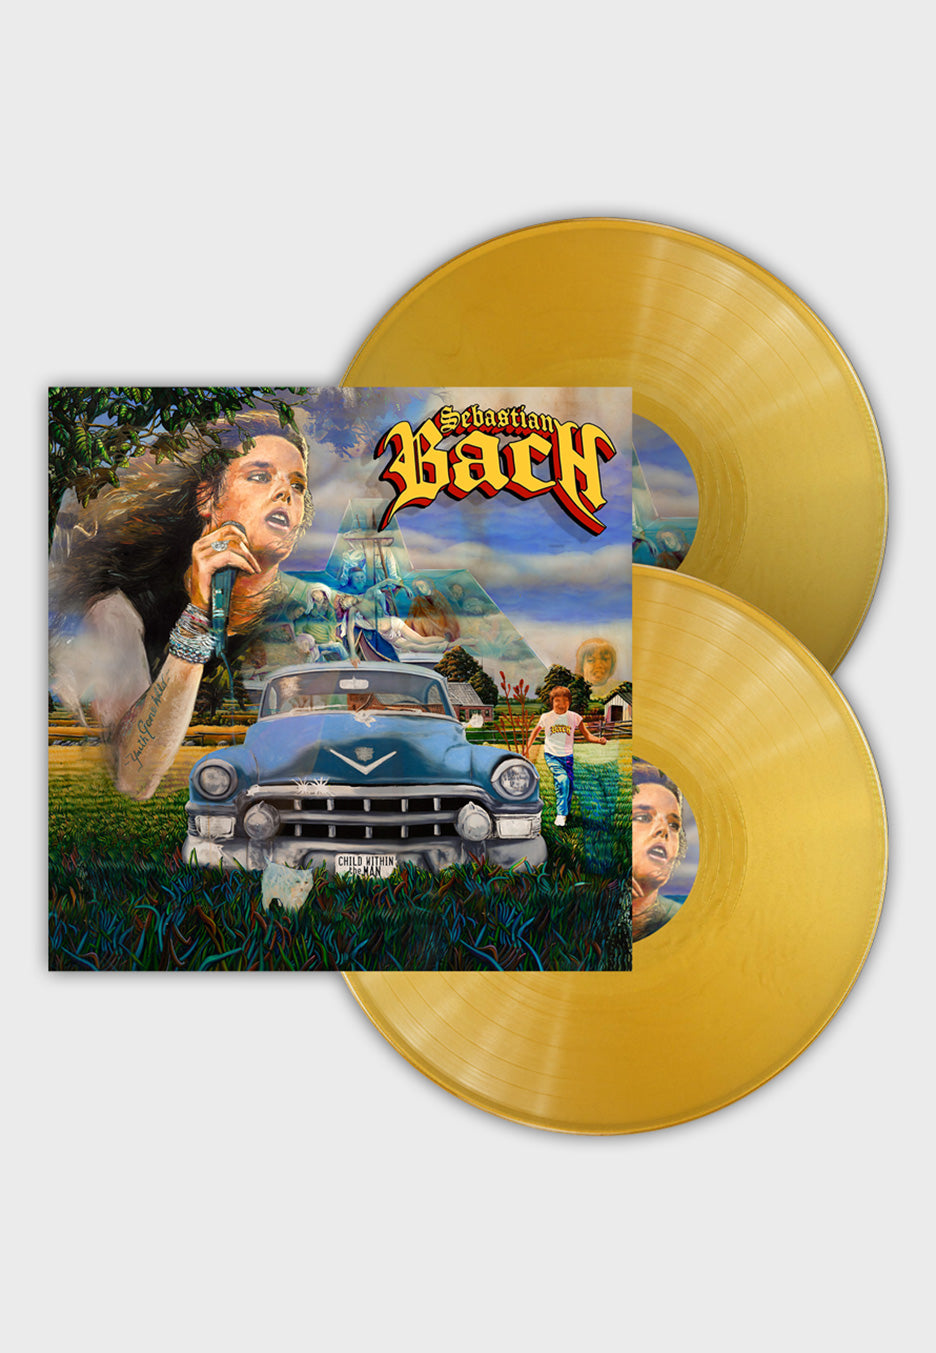 Sebastian Bach - Child Within The Man Gold Ltd. - Colored 2 Vinyl